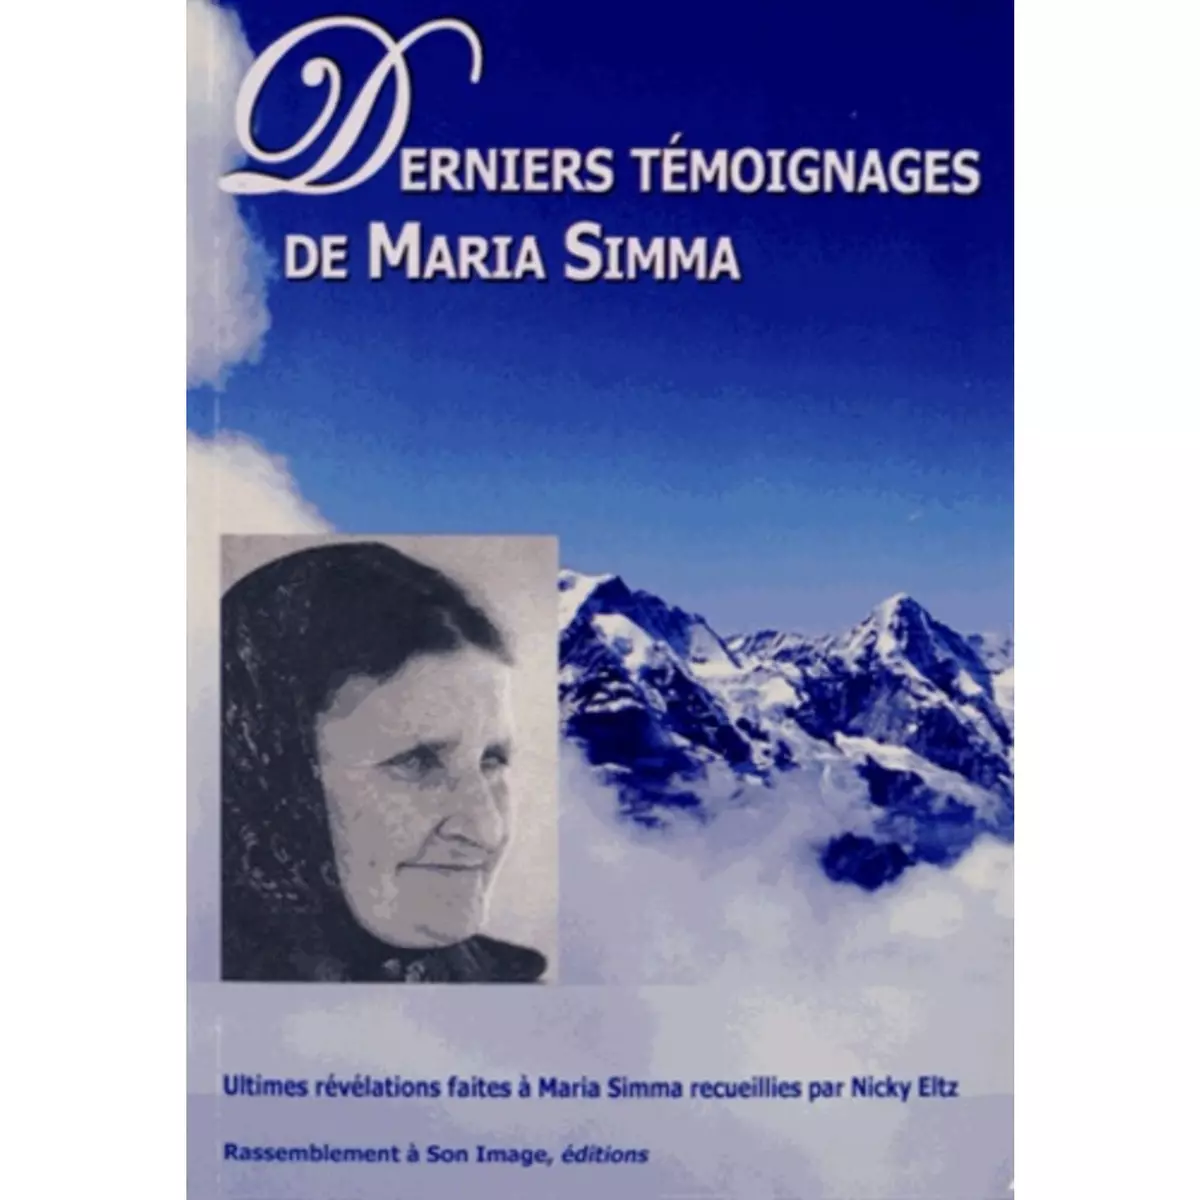  DERNIERS TEMOIGNAGES DE MARIA SIMMA, Simma Maria